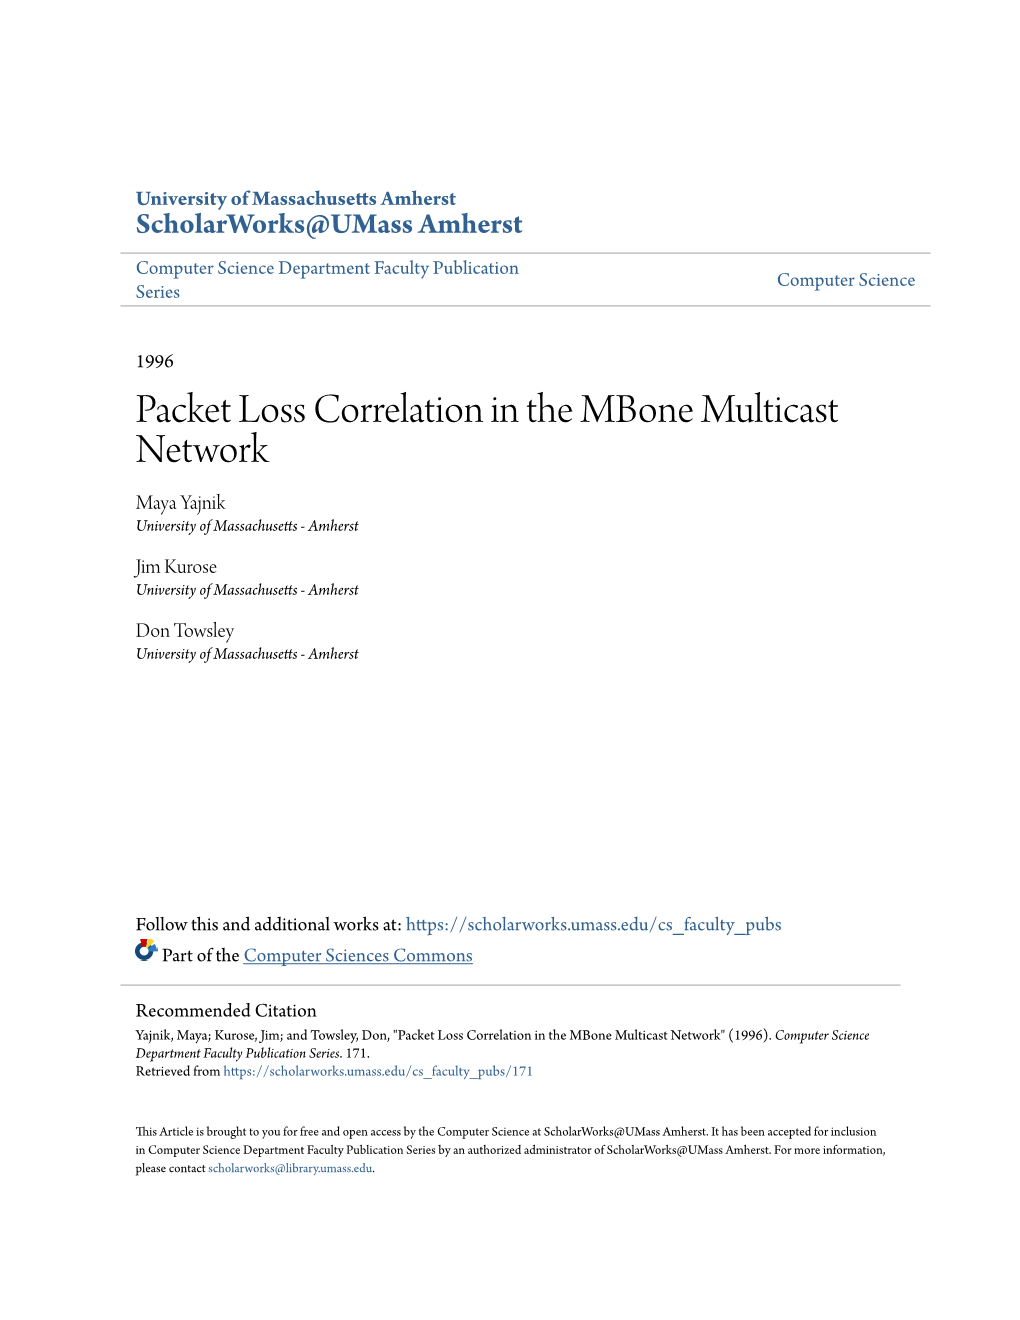 Packet Loss Correlation in the Mbone Multicast Network Maya Yajnik University of Massachusetts - Amherst